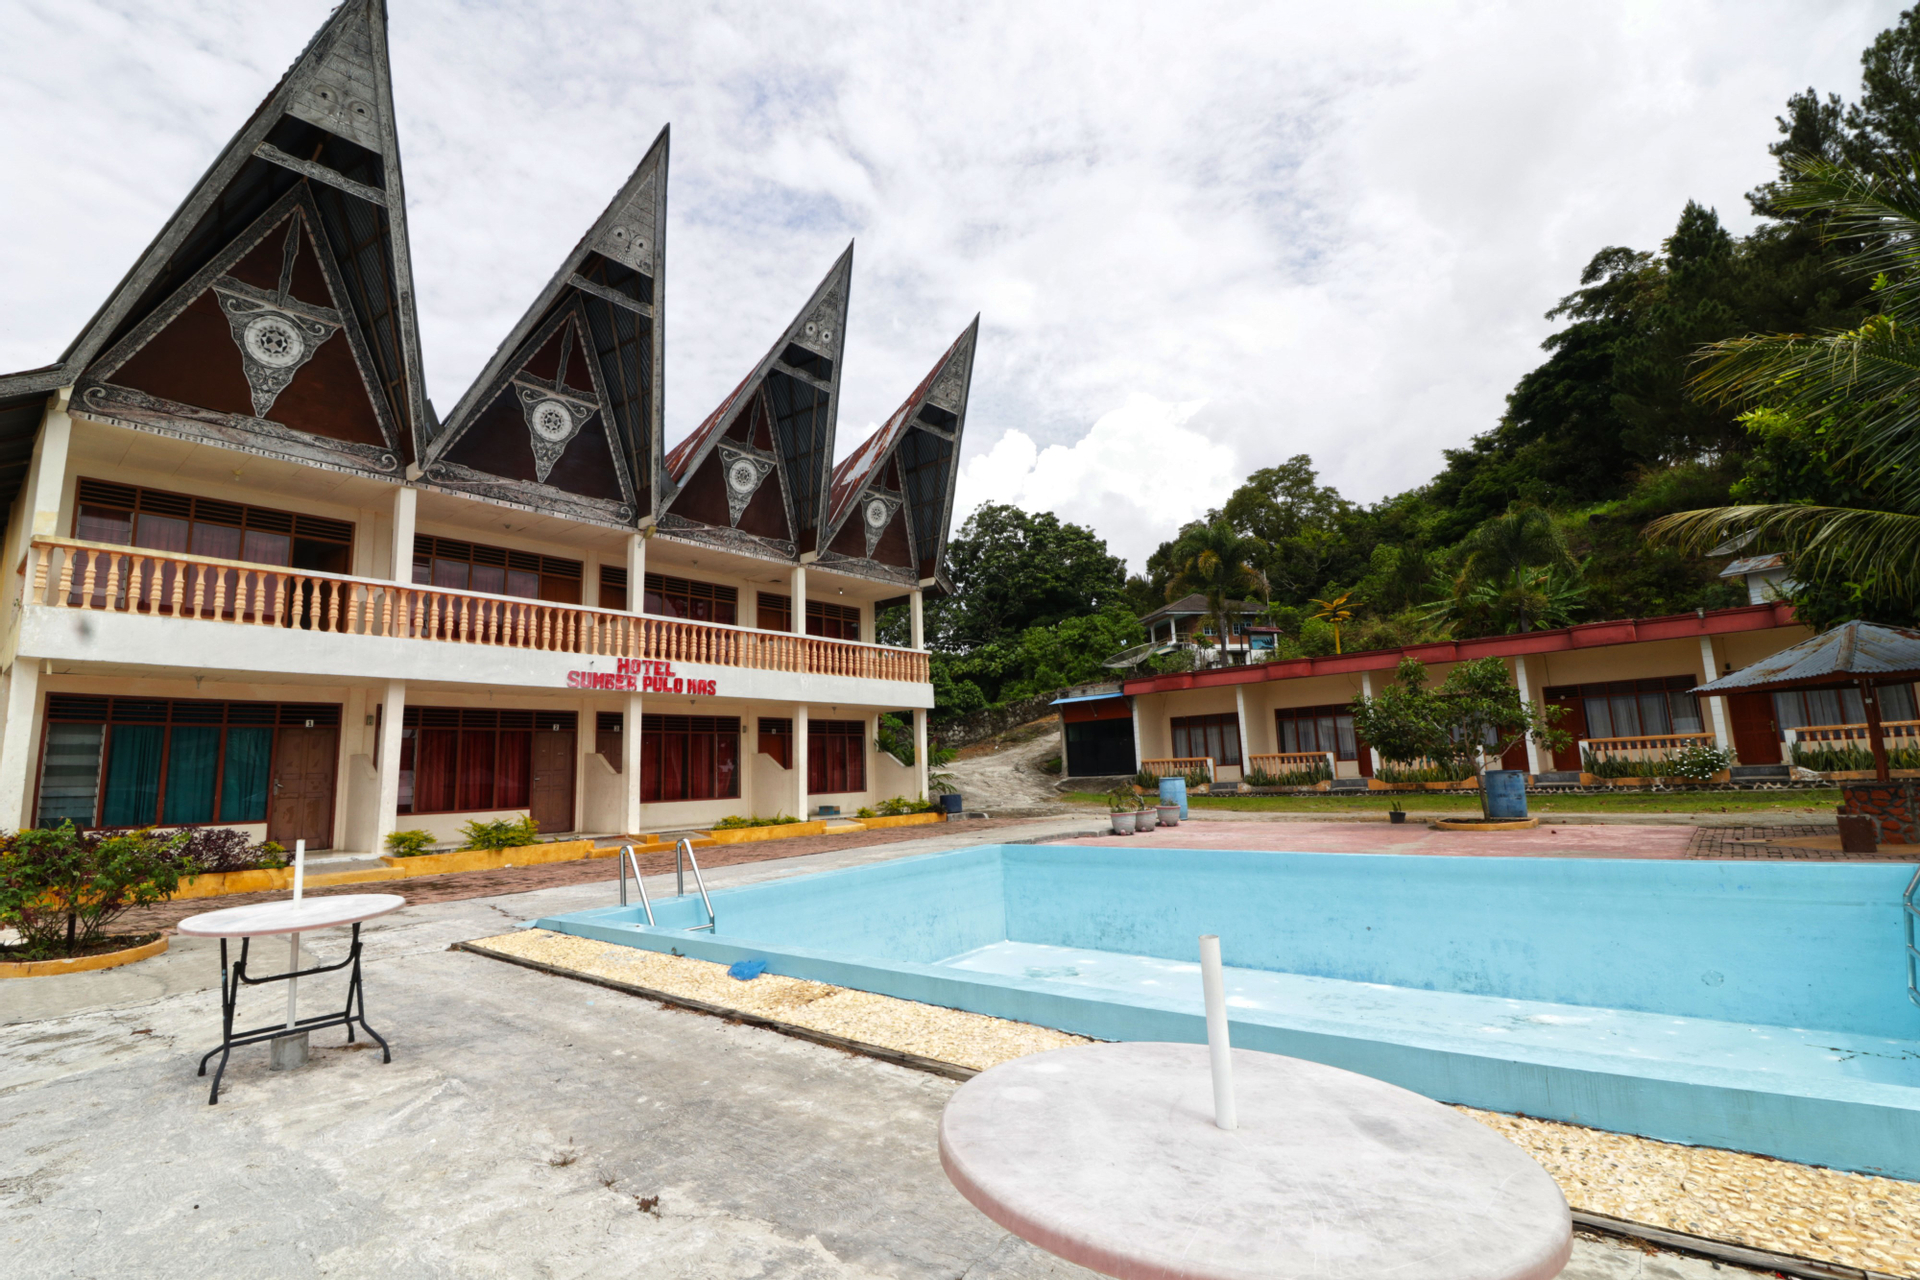 Sport & Beauty, Hotel Sumber Pulo Mas, Samosir